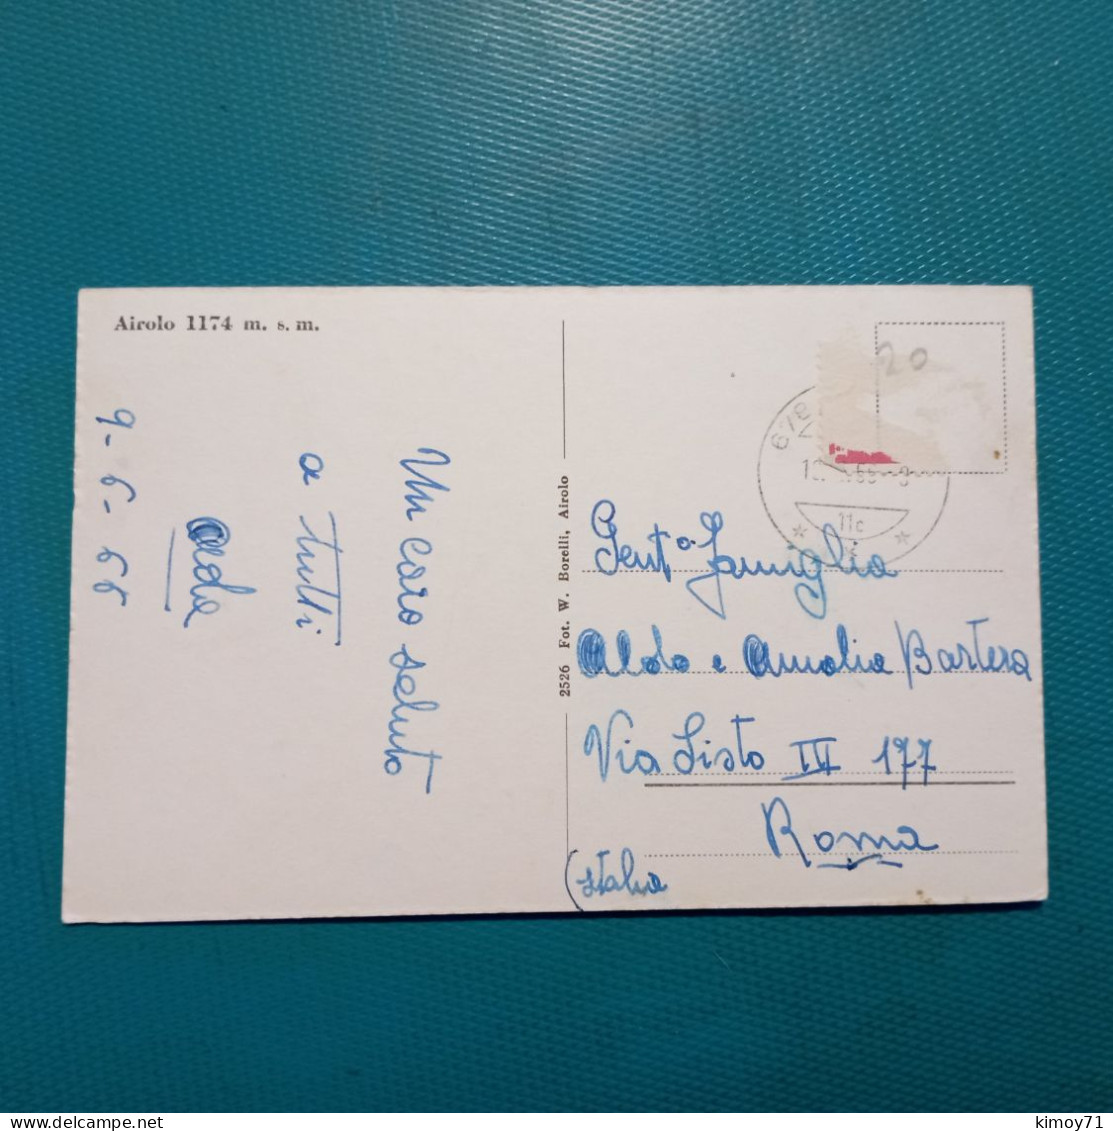 Cartolina Airolo 1174 M.s.m. Viaggiata 1966 - Airolo